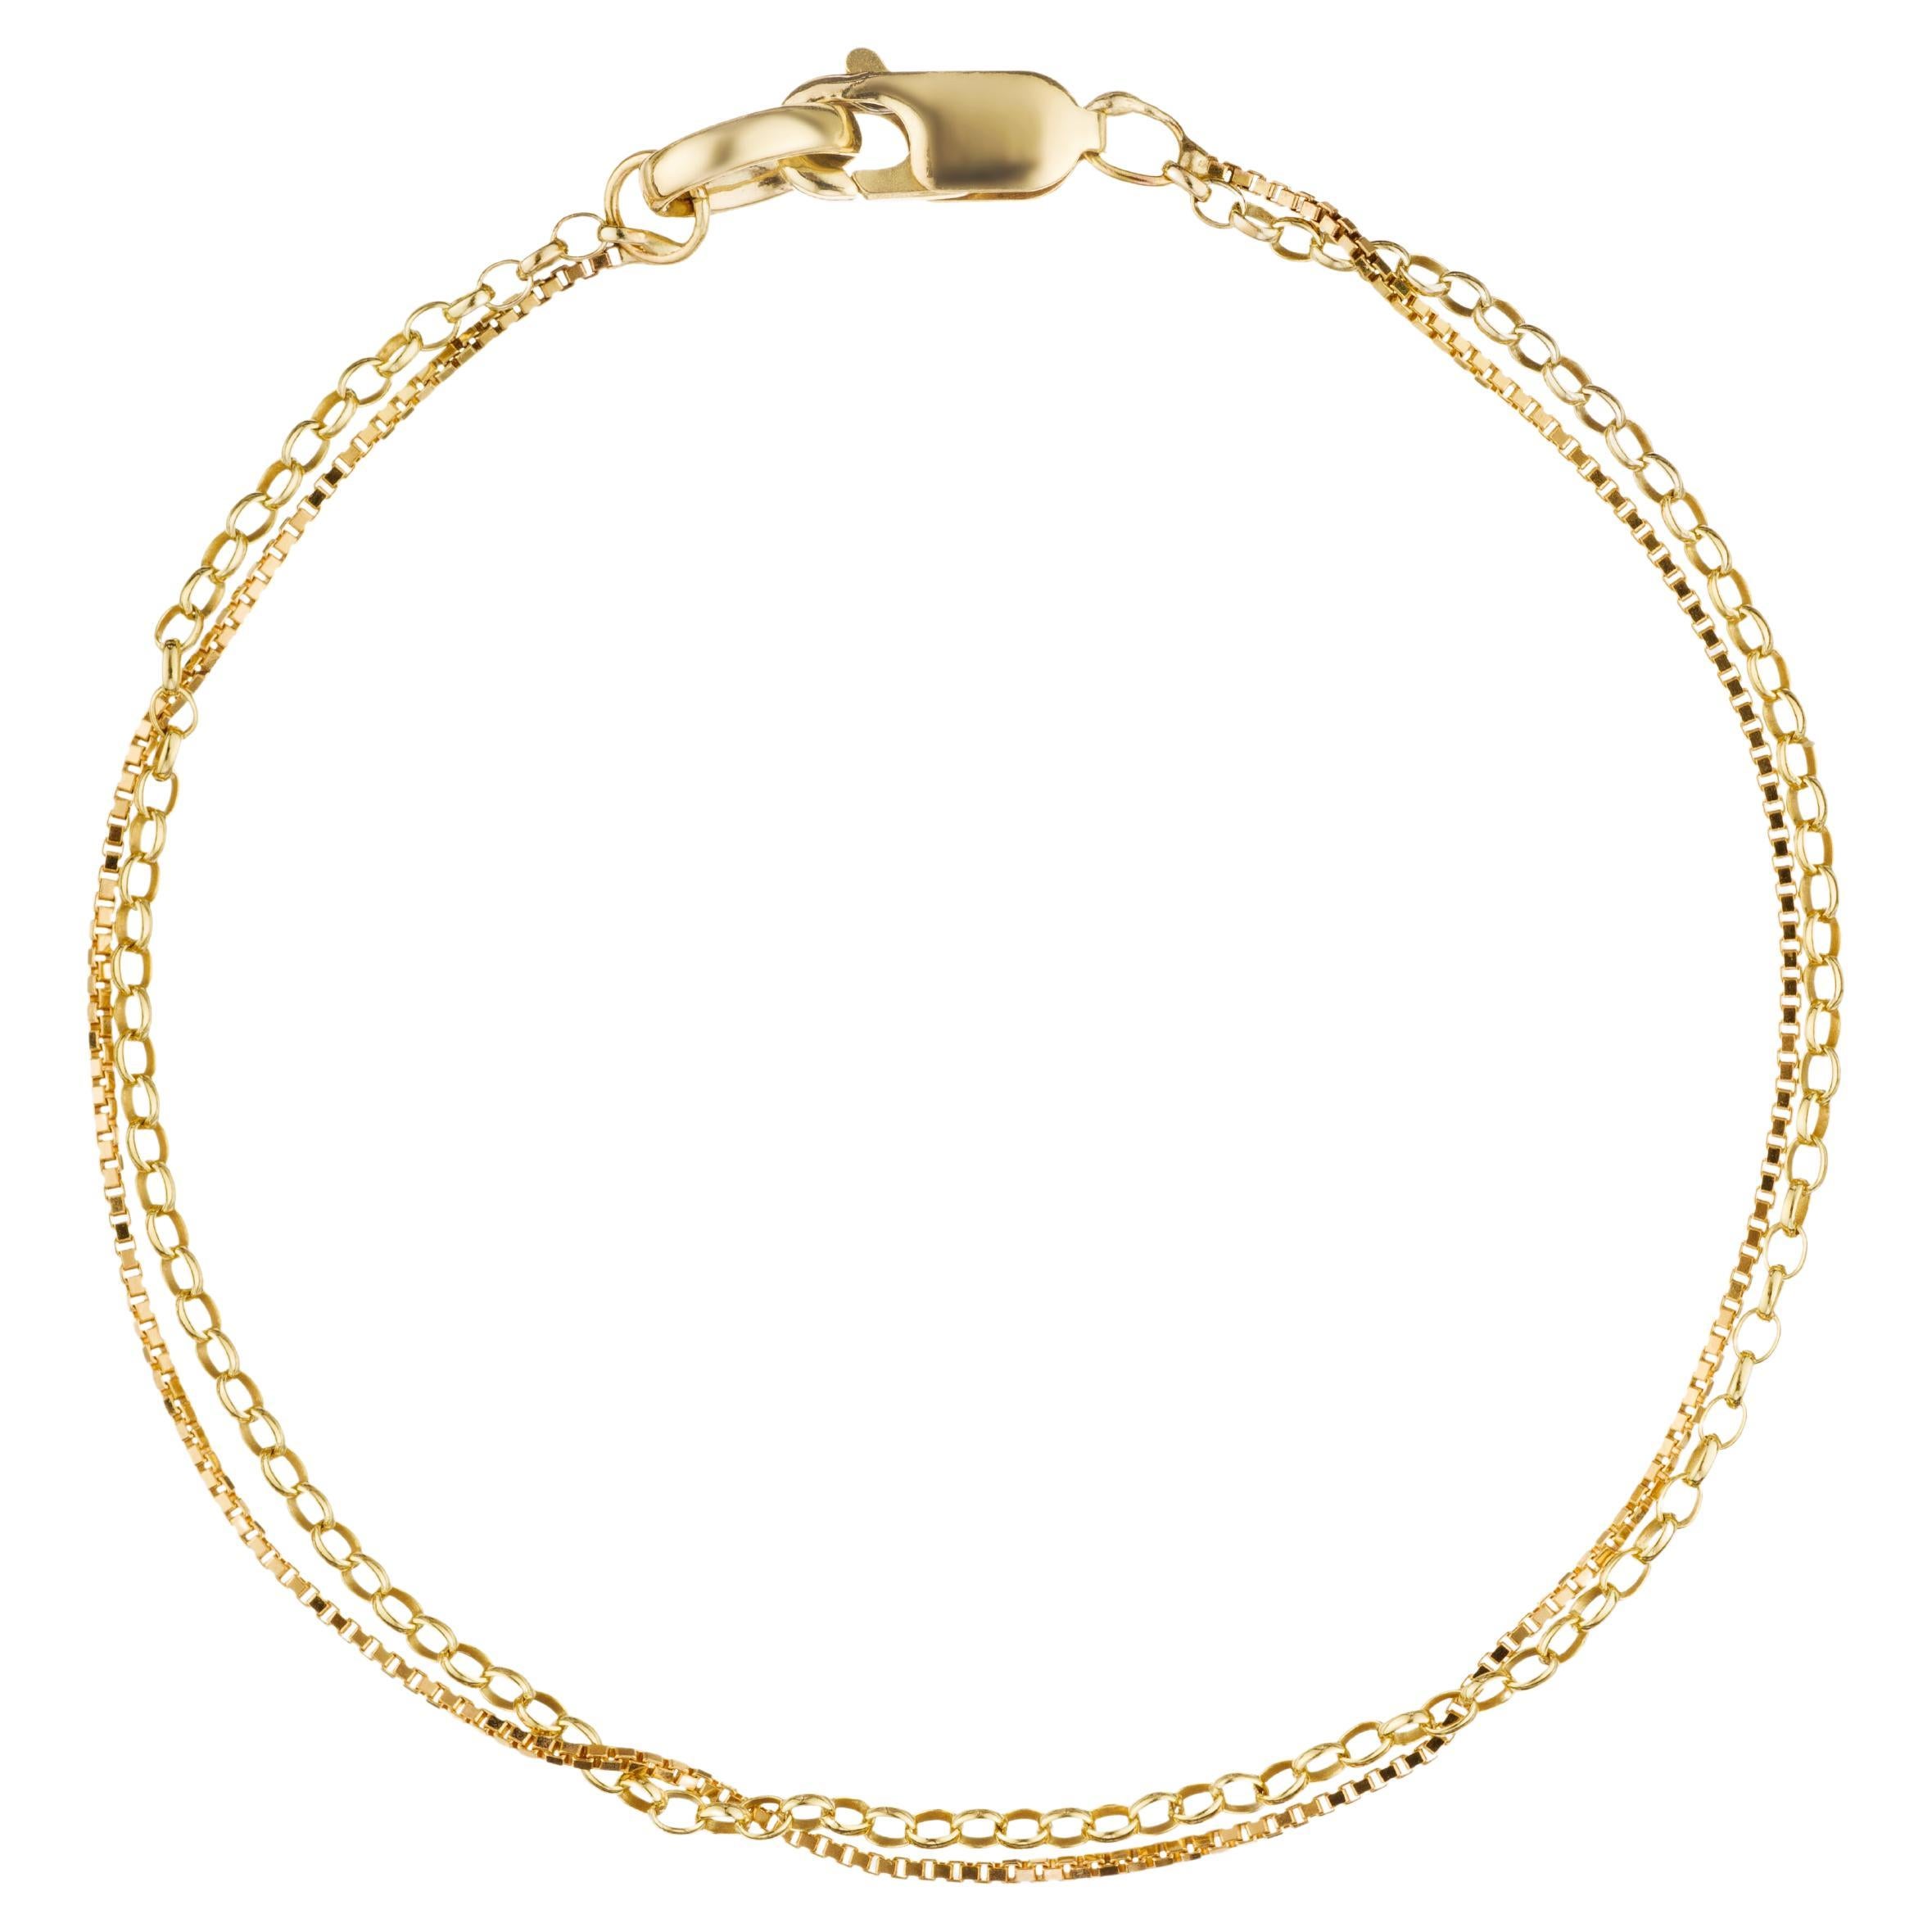 9 Karat Gold Duo Venetian Chain Bracelet